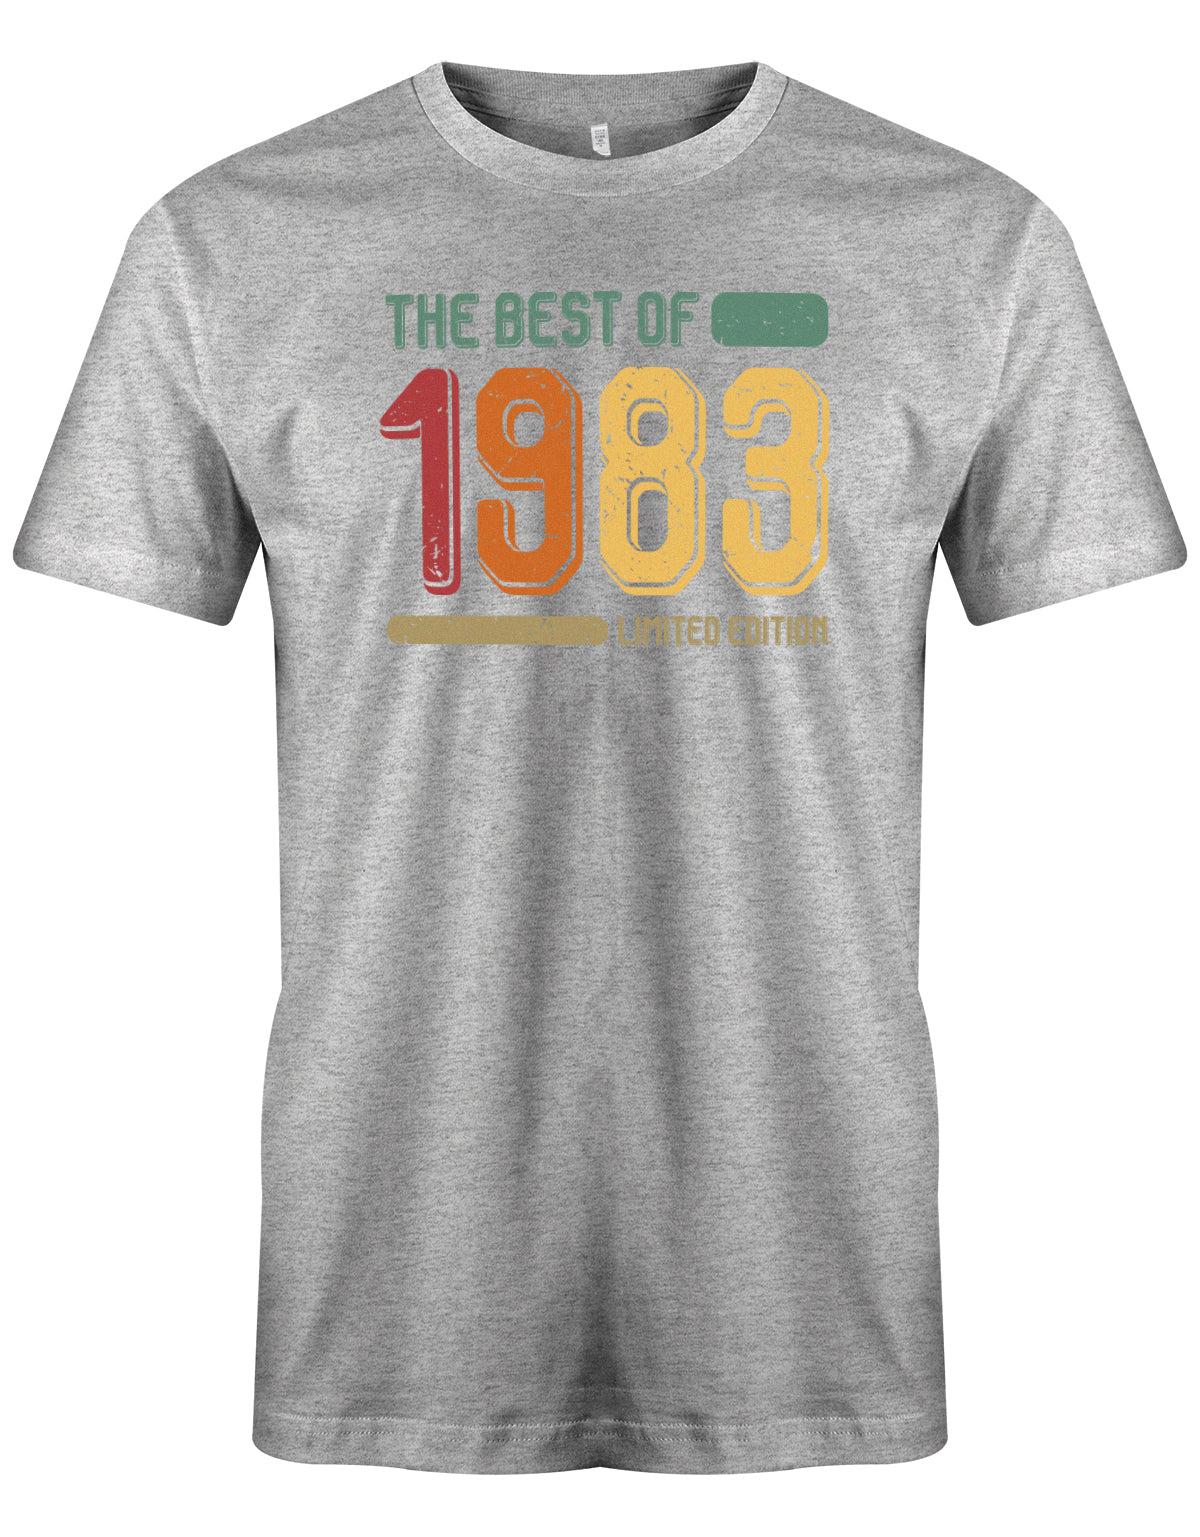 The best of 1983 Limited Edition Vintage TShirt - T-Shirt 40 Geburtstag Männer myShirtStore Grau